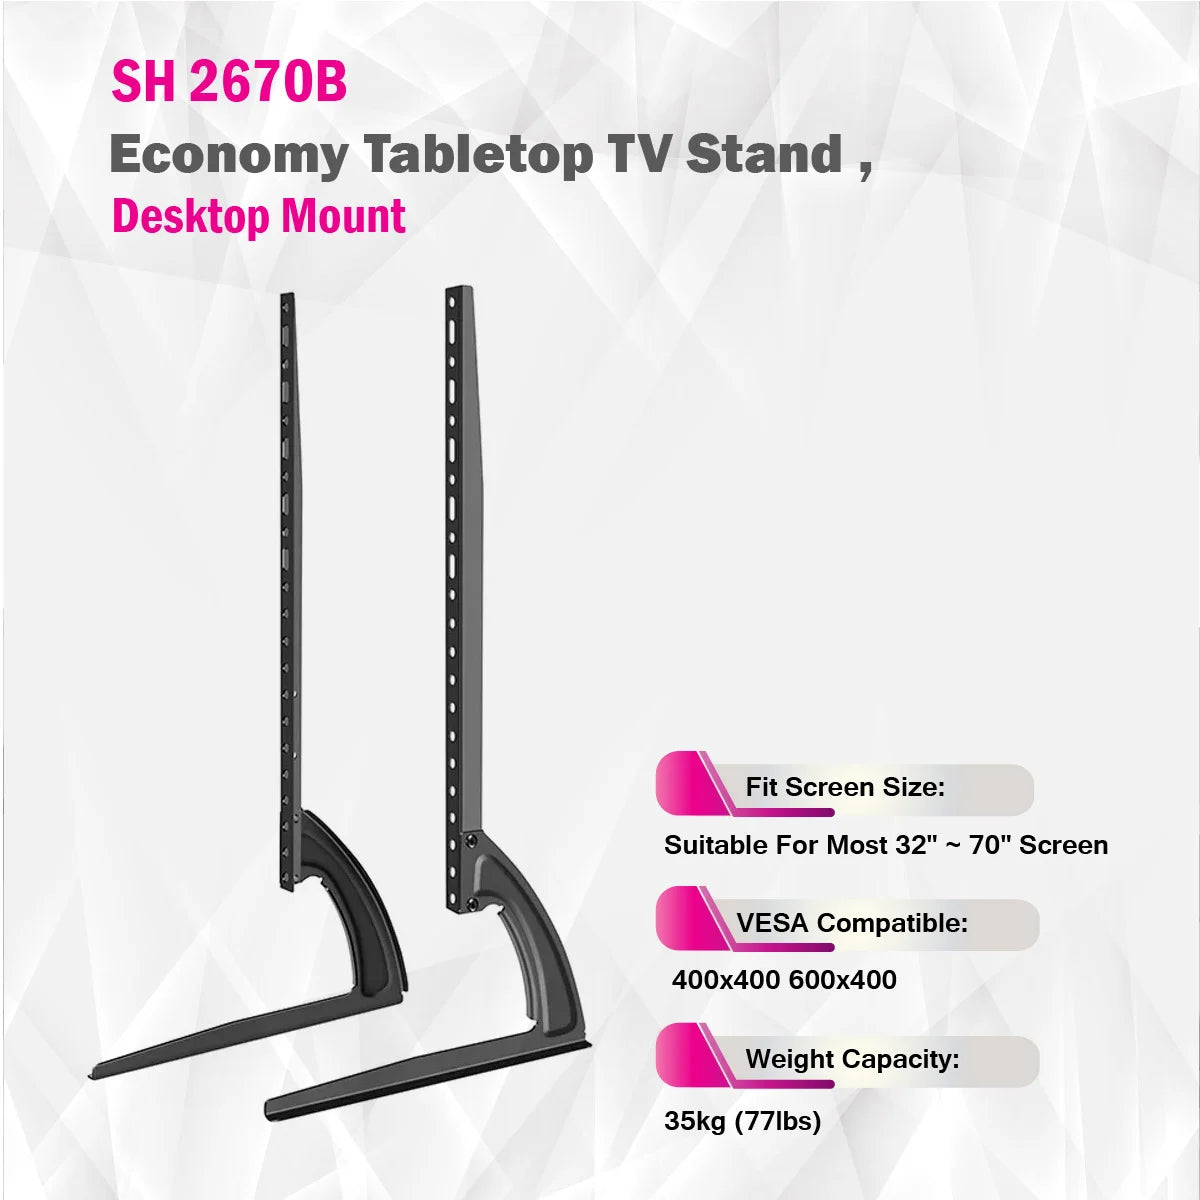 SkillTech - SH 2670B - Economy Tabletop TV Stand , Desktop Mount